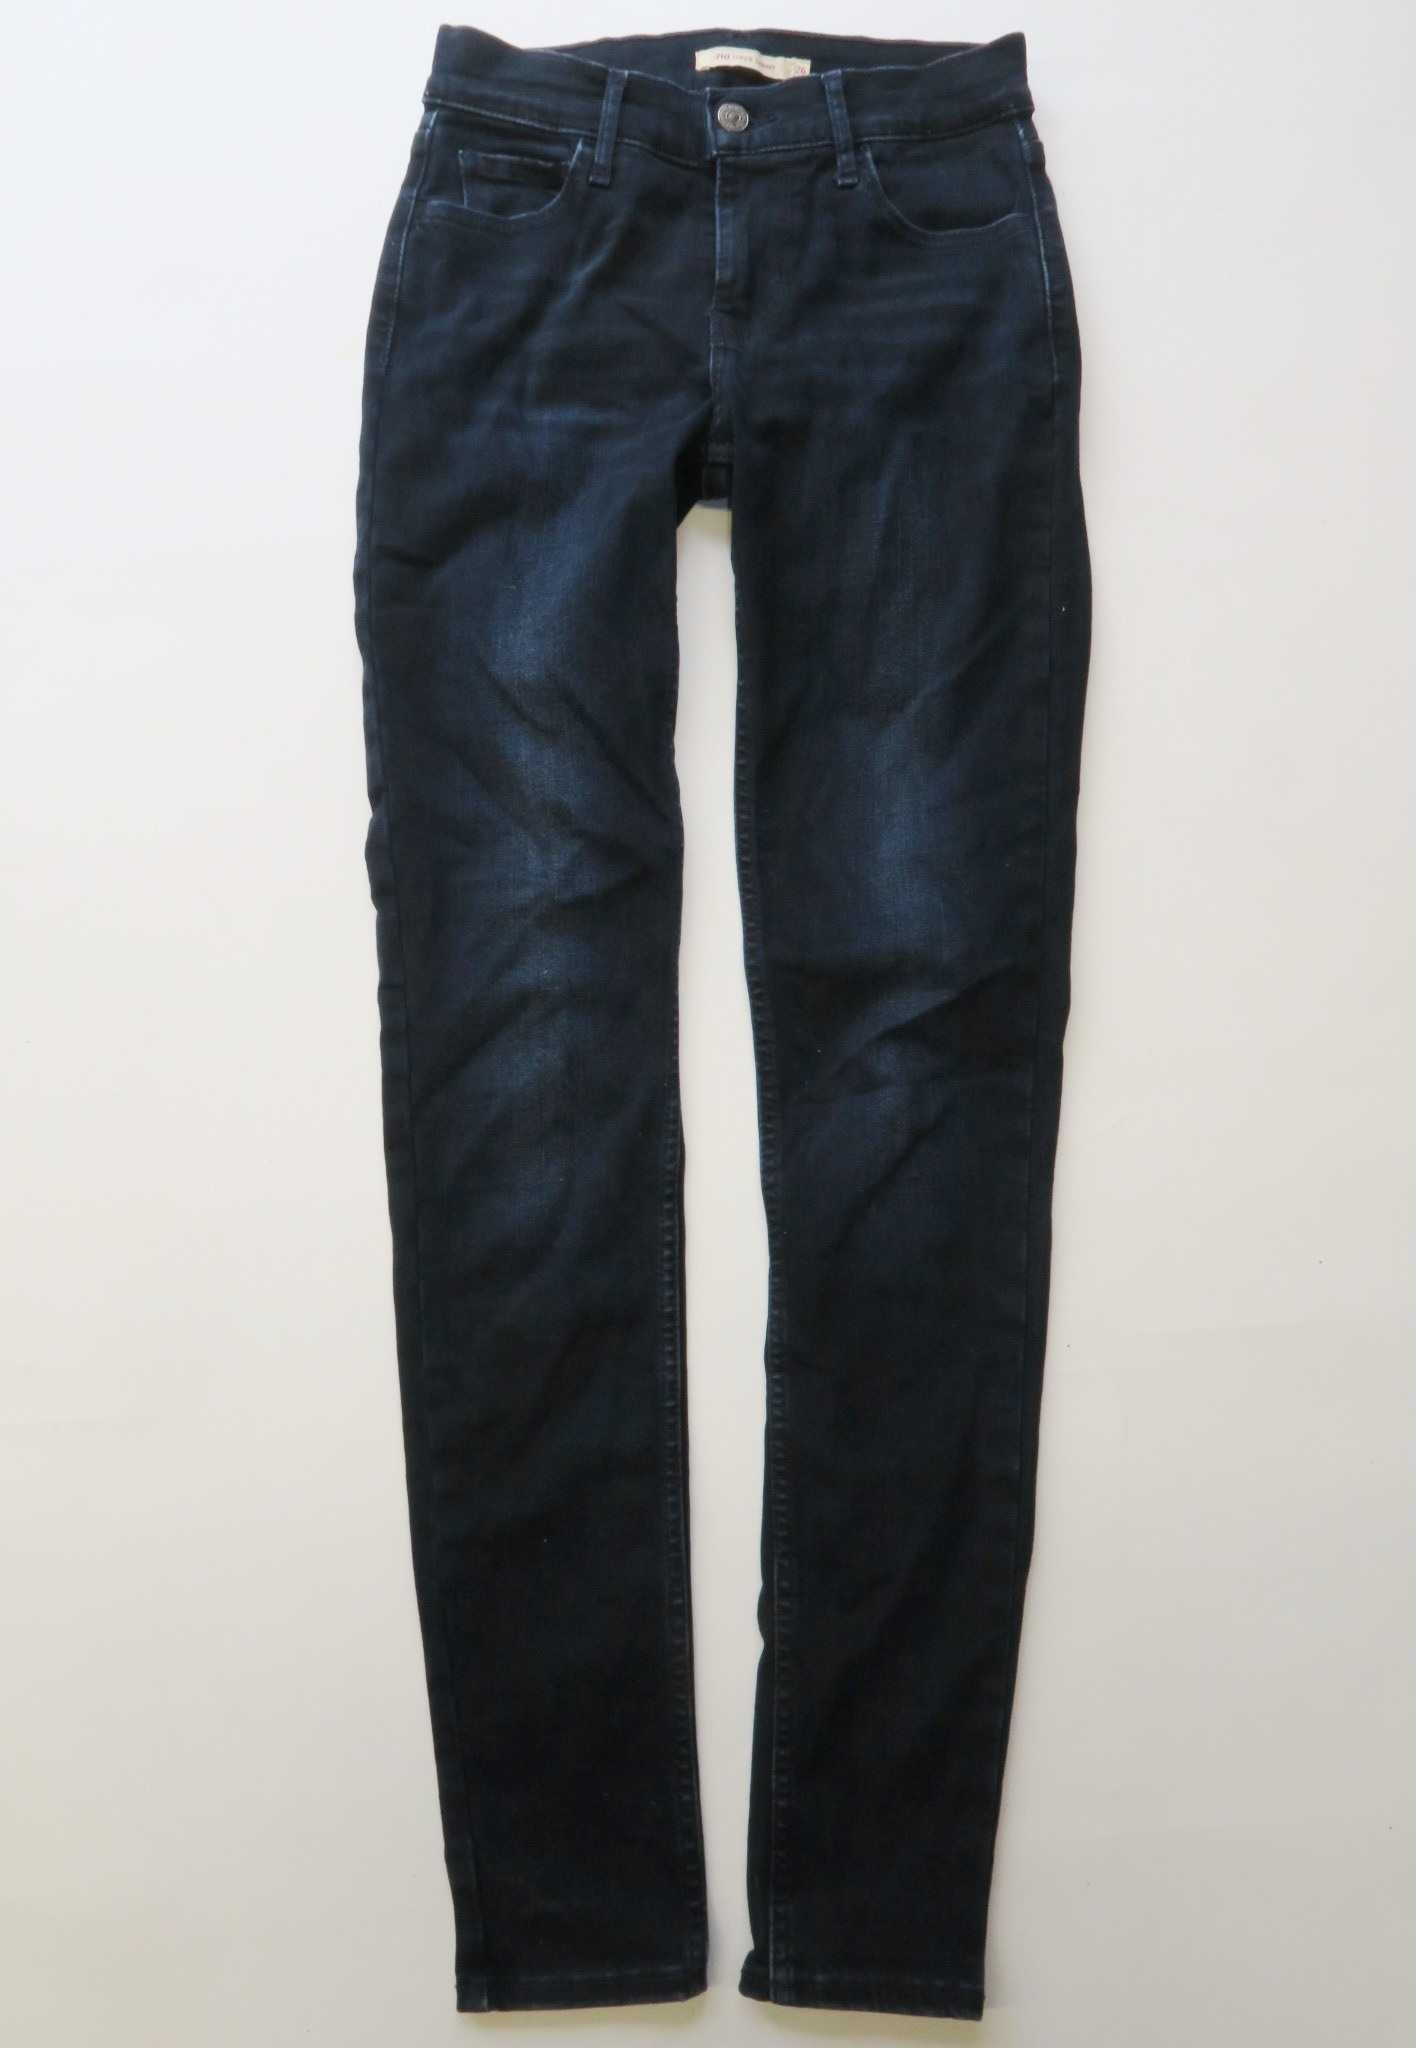 Levi's spodnie rurki damskie jeansy super skinny 26